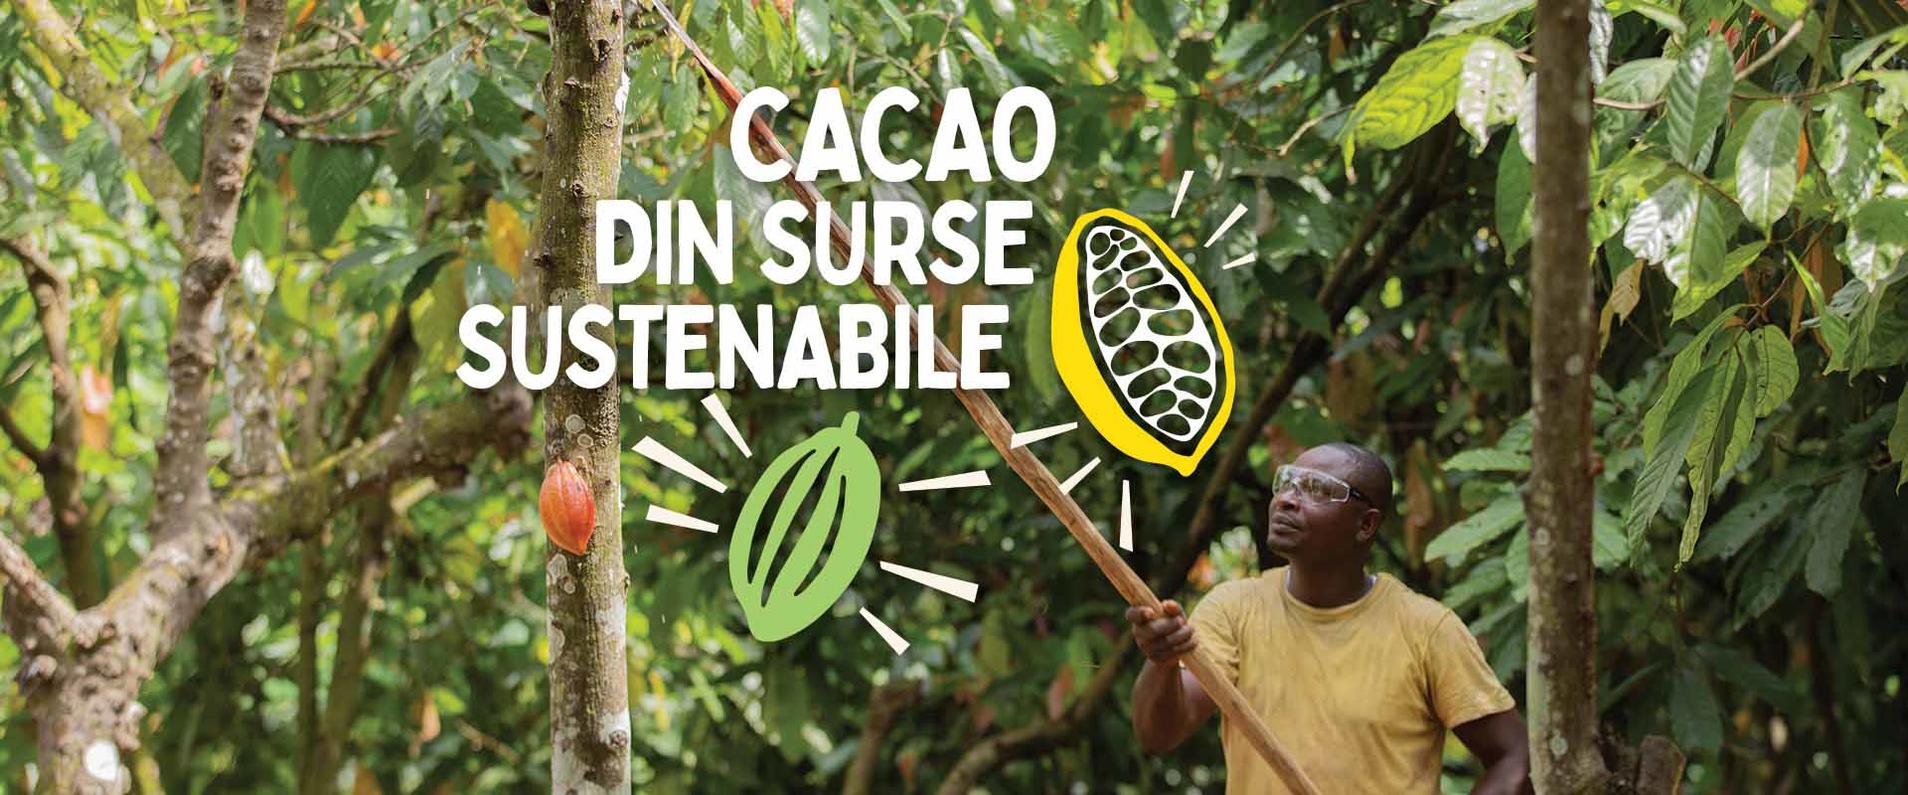 Cacao din surse sustenabile